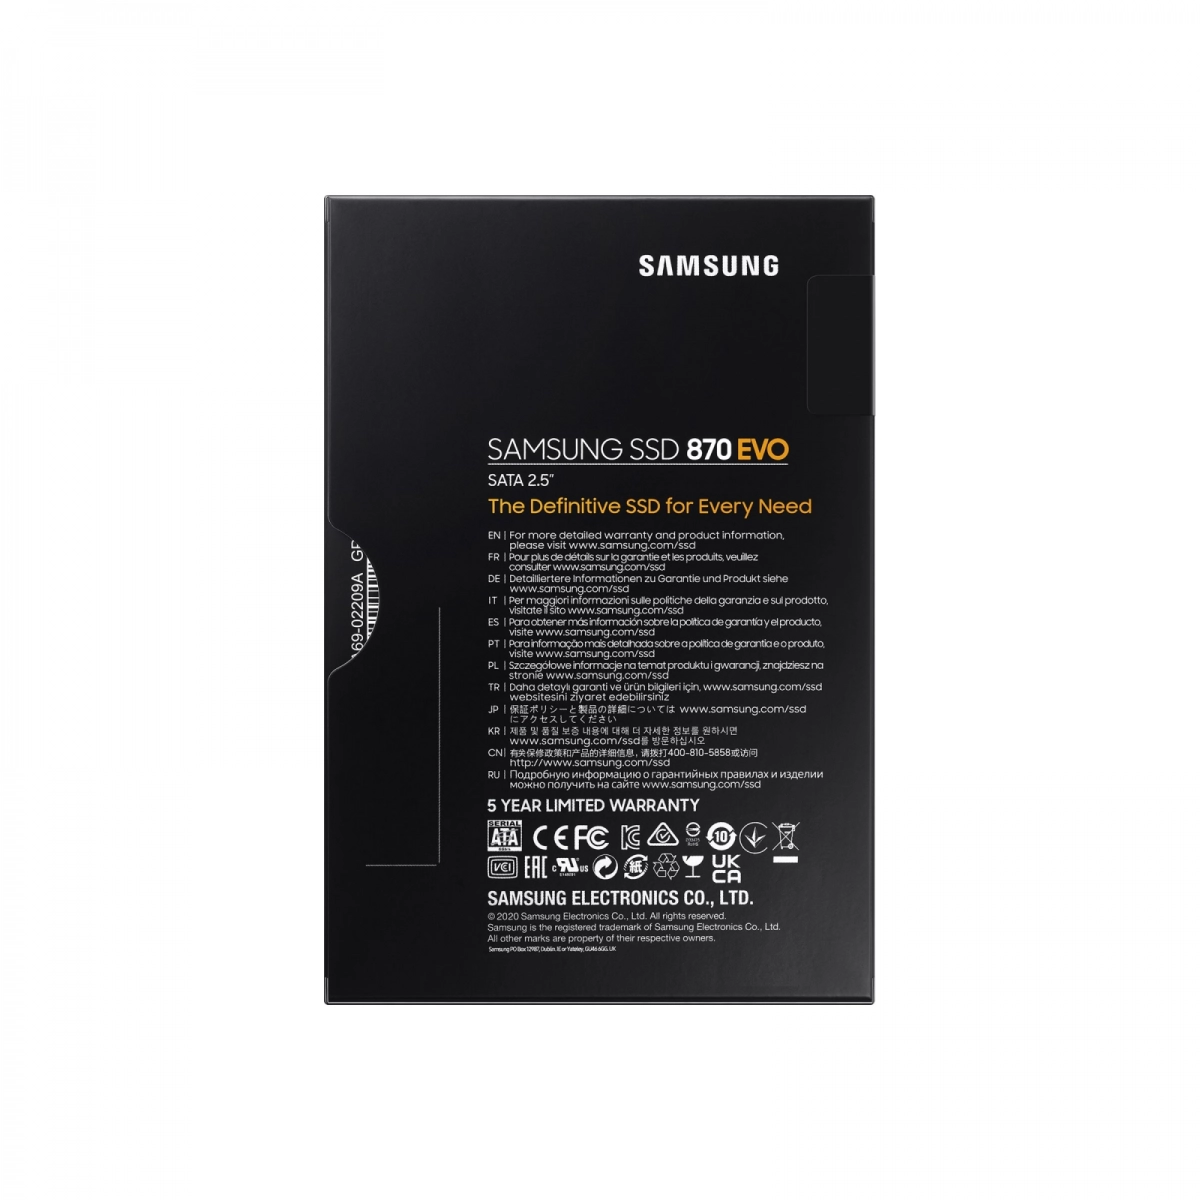 Notebook-Festplatte 500GB, SSD SATA3 MLC für PANASONIC ToughBook CF-19 DDR3 (i5, i7 CPU)